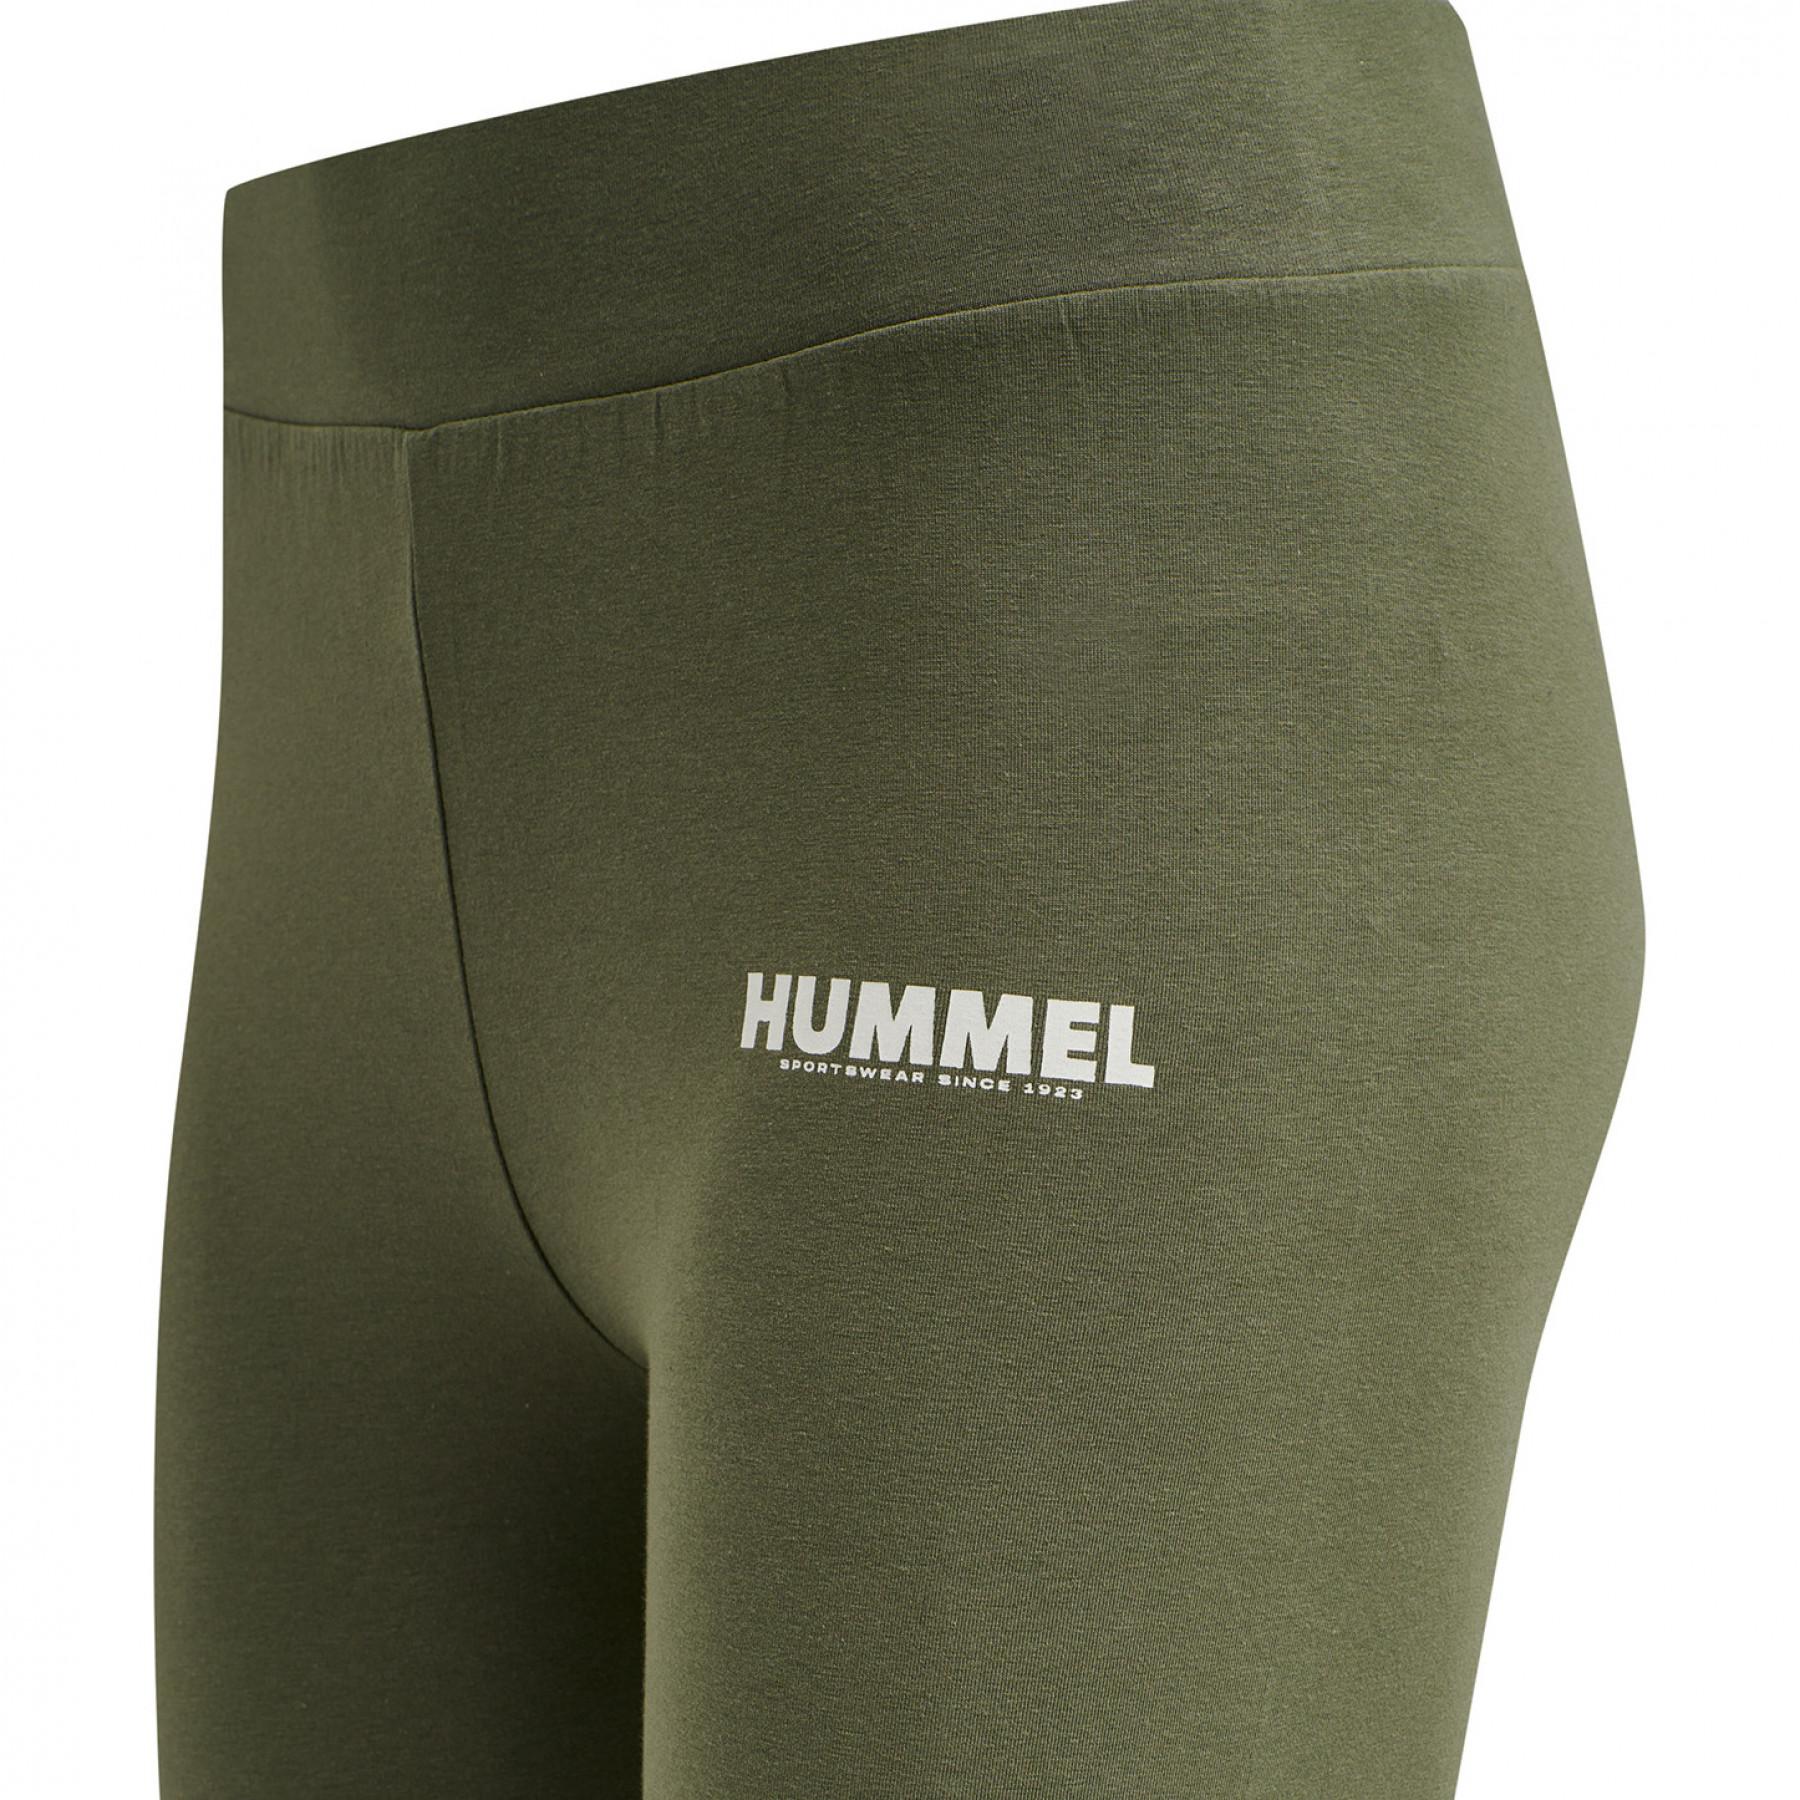 Mallas de cintura alta para mujer Hummel hmllegacy